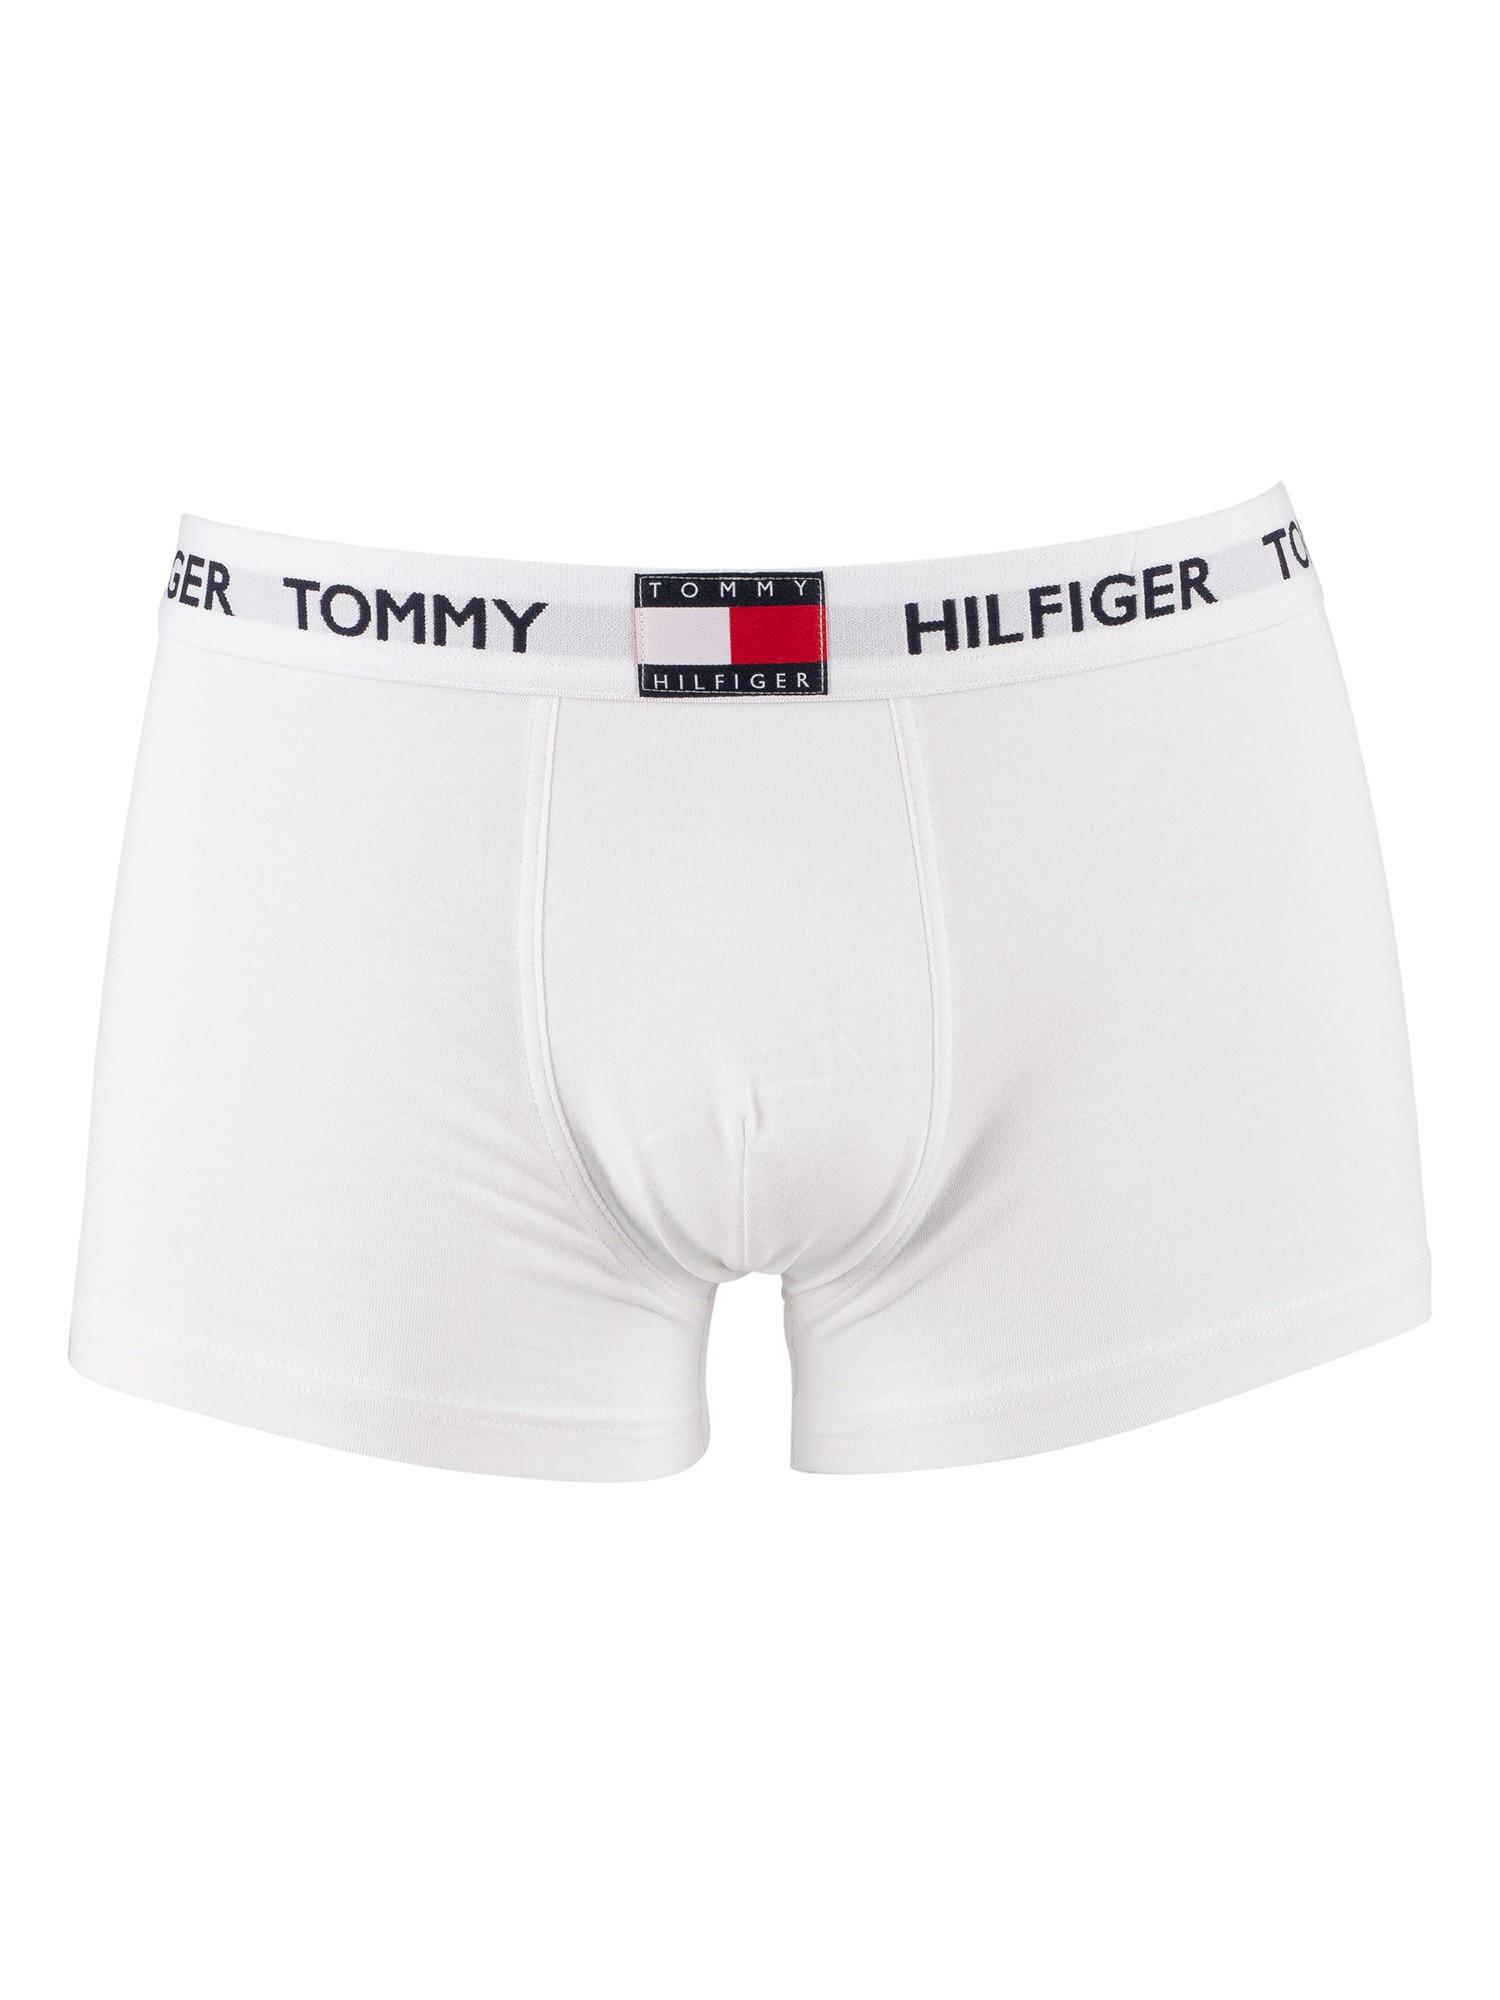 Tommy Hilfiger Flag Waistband Trunks in White for Men | Lyst